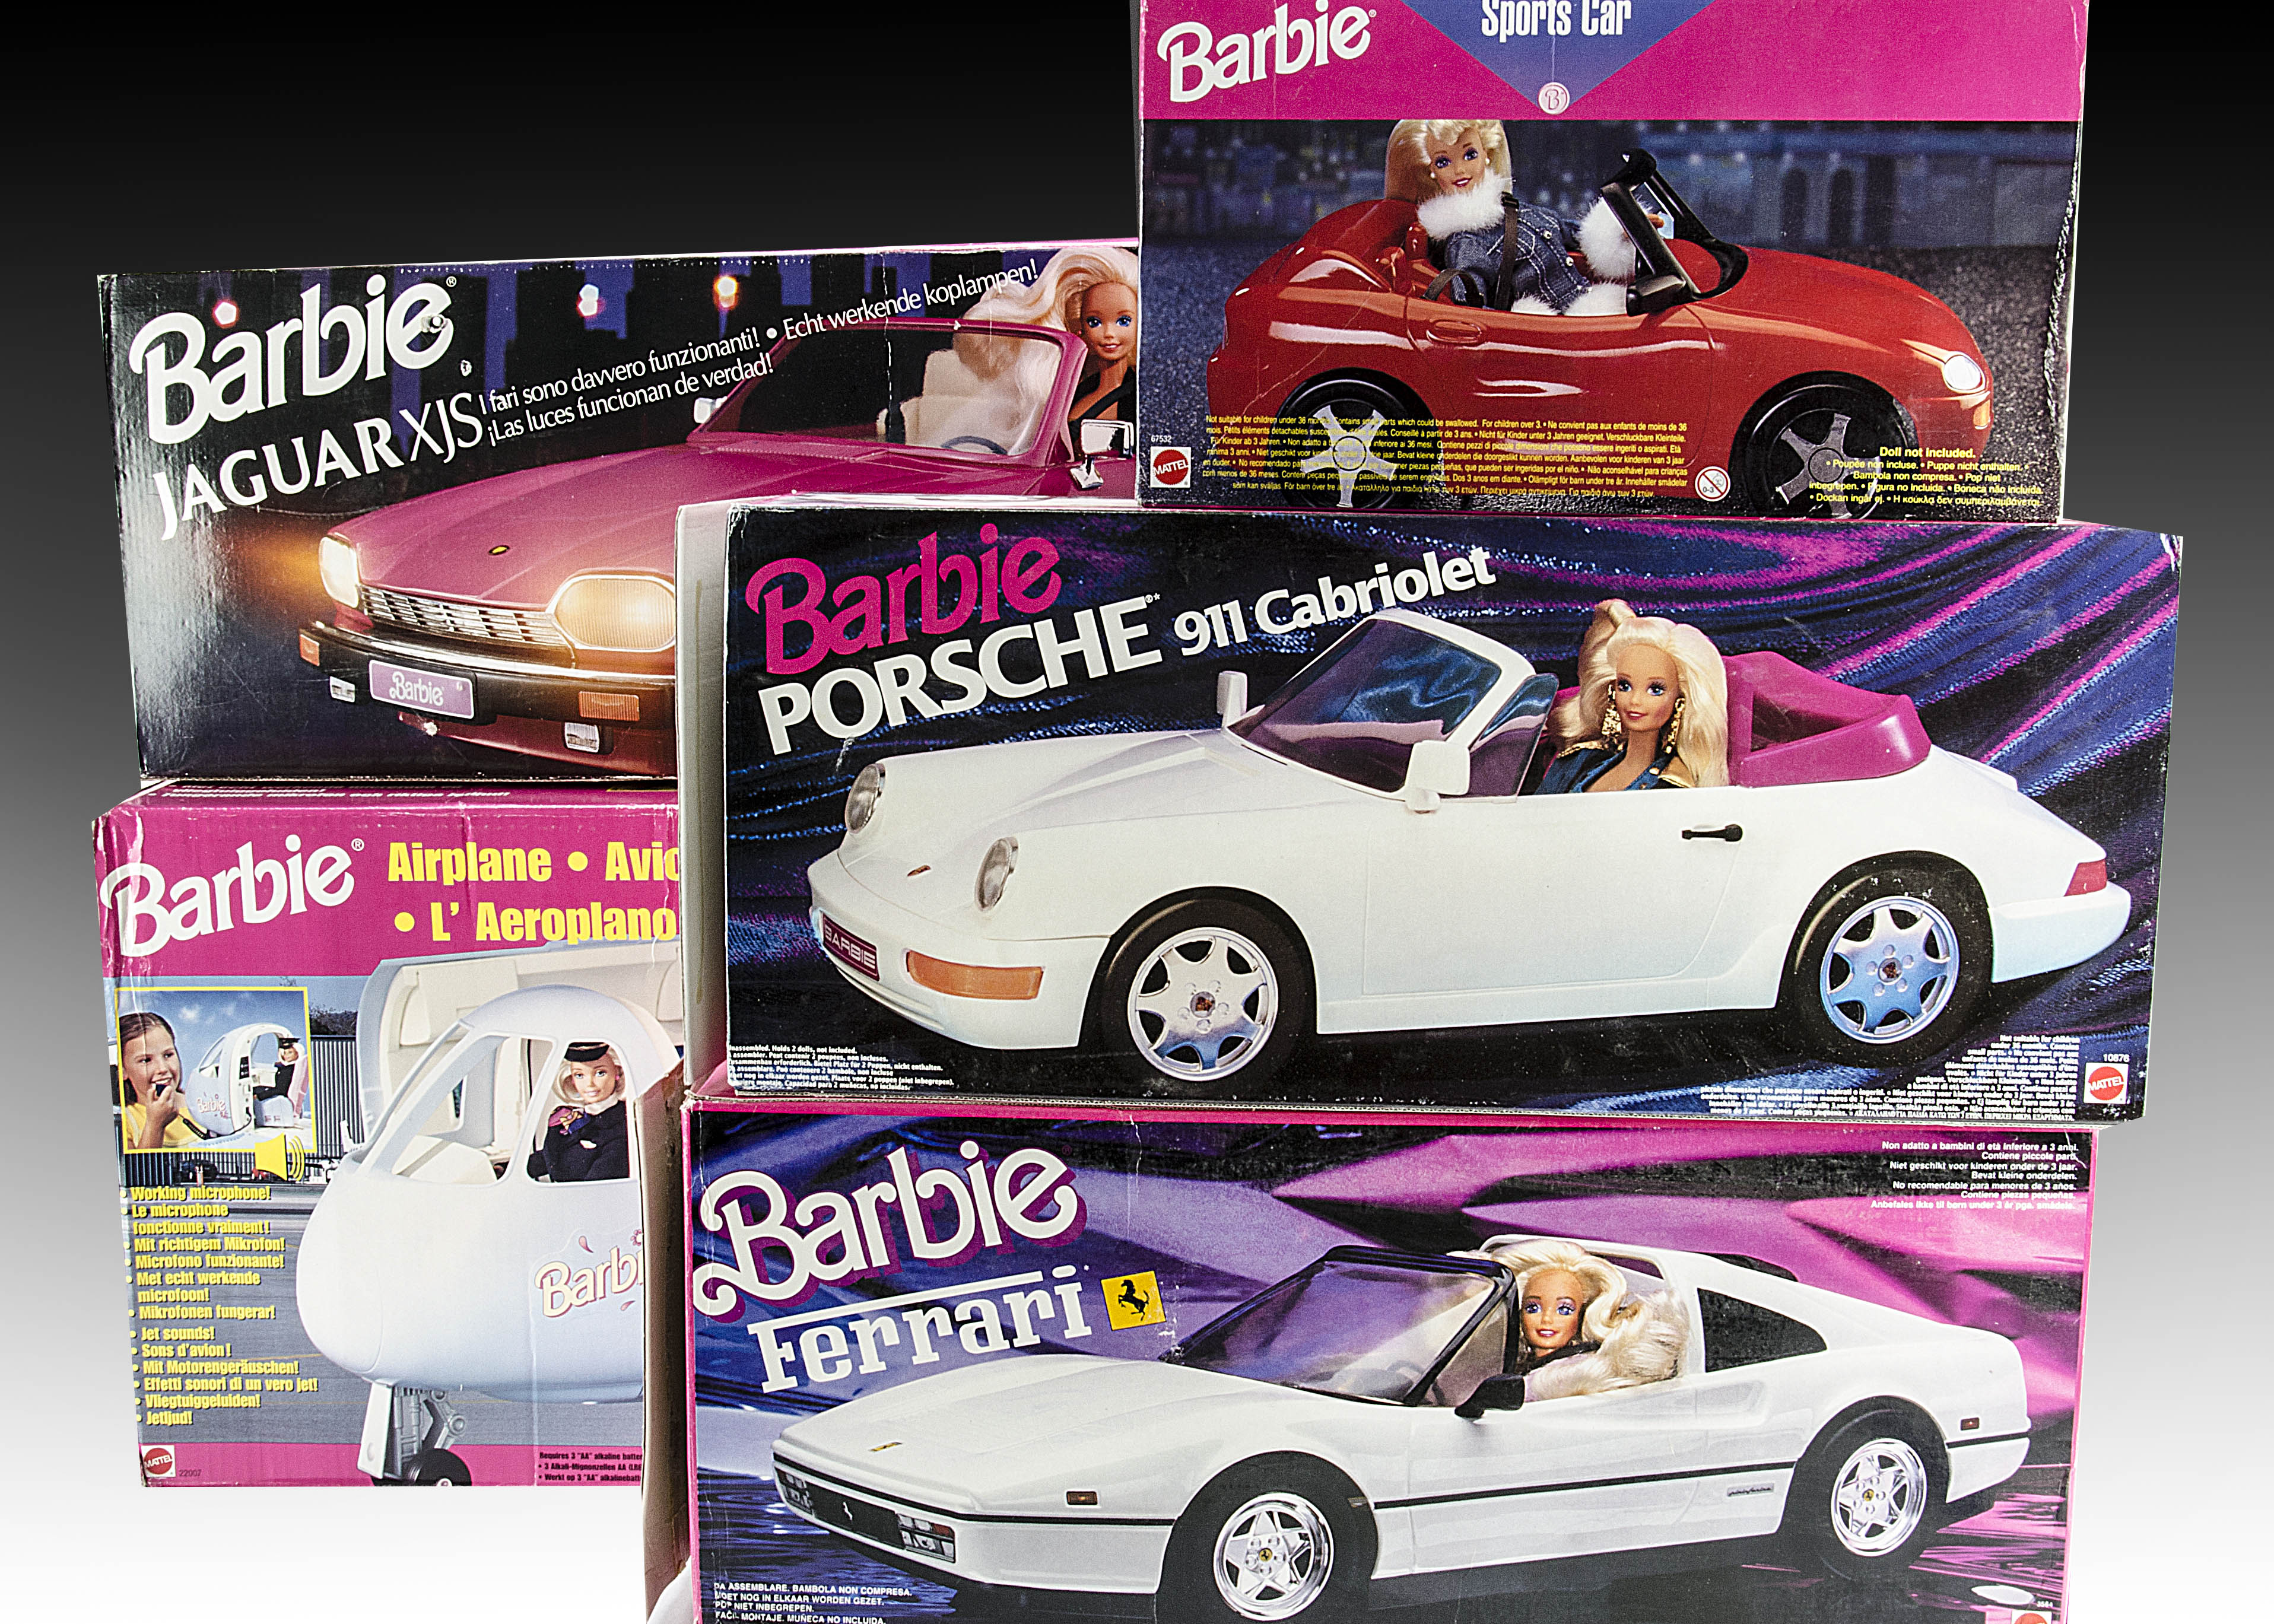 Five 1990s Barbie Vehicles: Jaguar XJS, Ferrari, Porsche 911 Cabriolet, Sports Car and Airplane, all